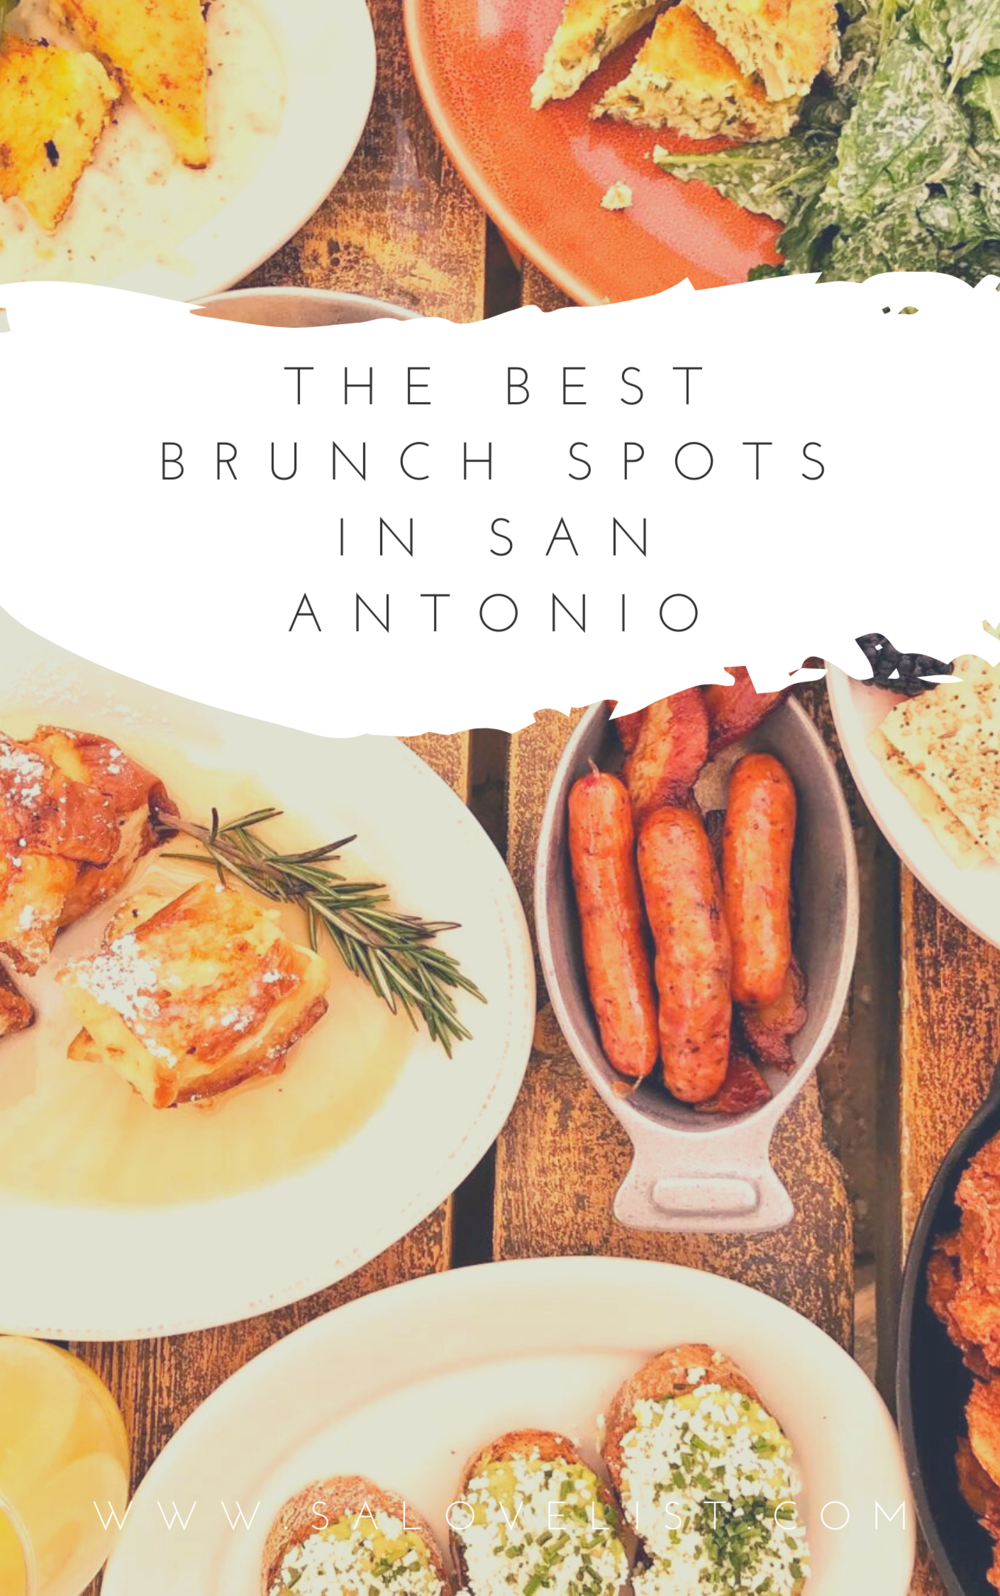 The Best Brunch Spots in San Antonio